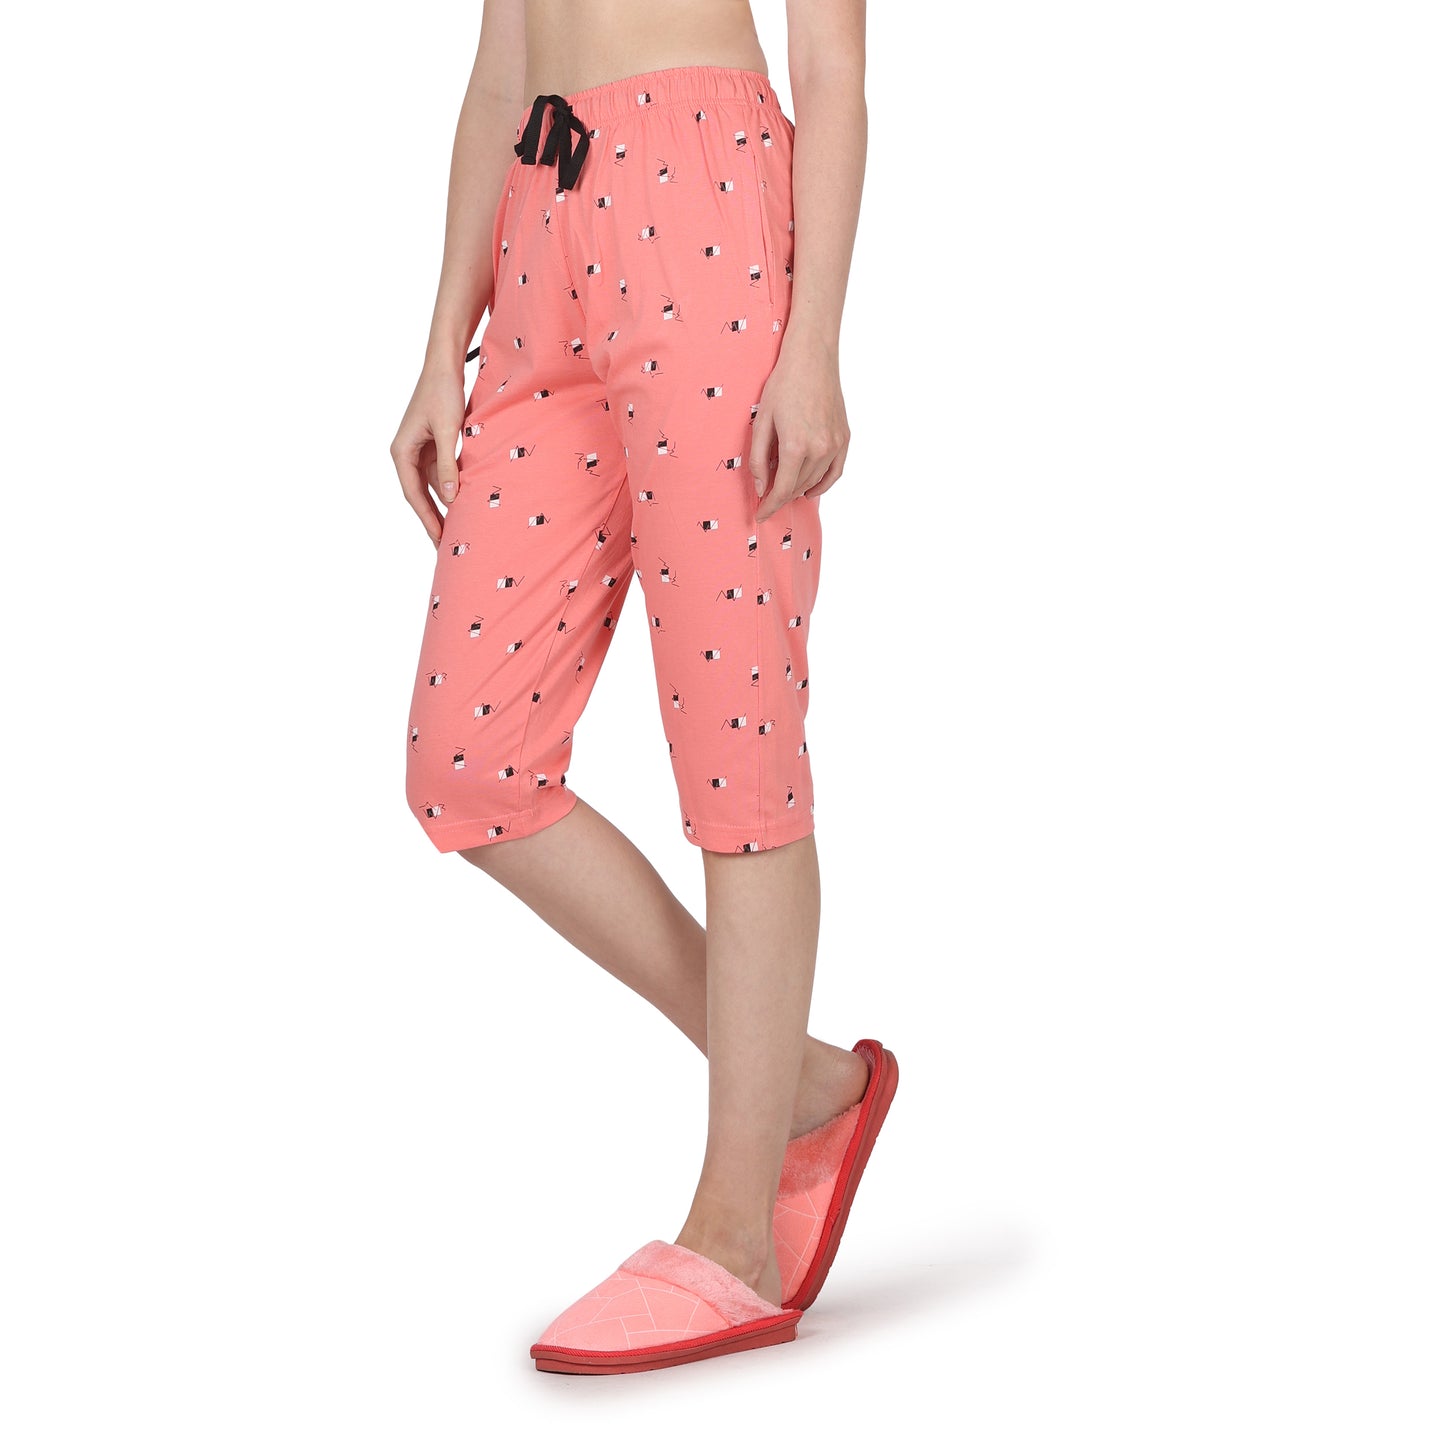 Eazy Women's Printed Capri Pants- Pack of 2- Blush & Cherry Red